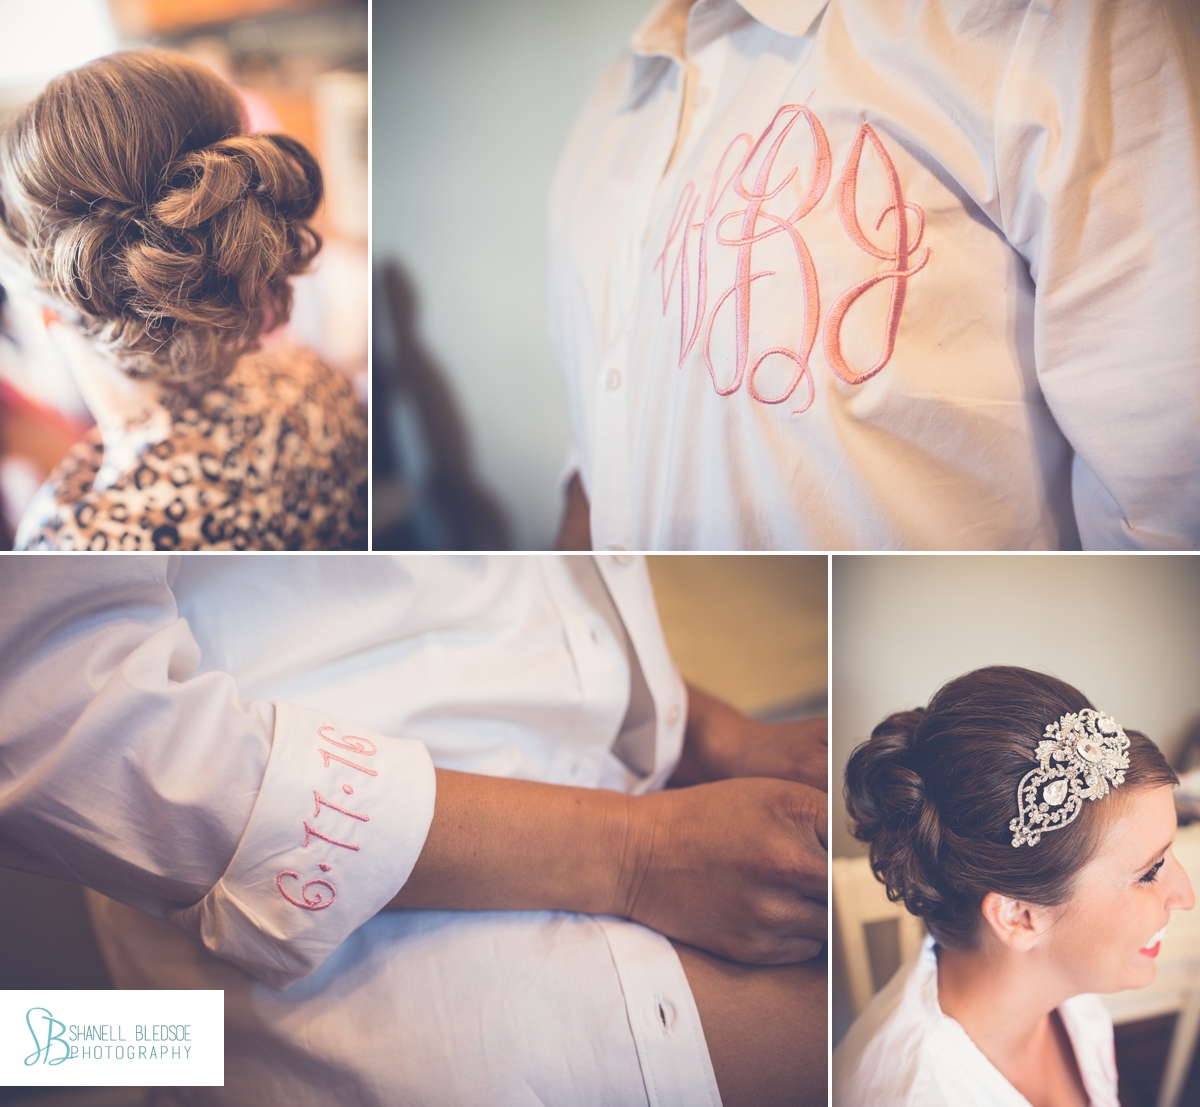 Bride's monogrammed shirt with wedding date, jeweled headband